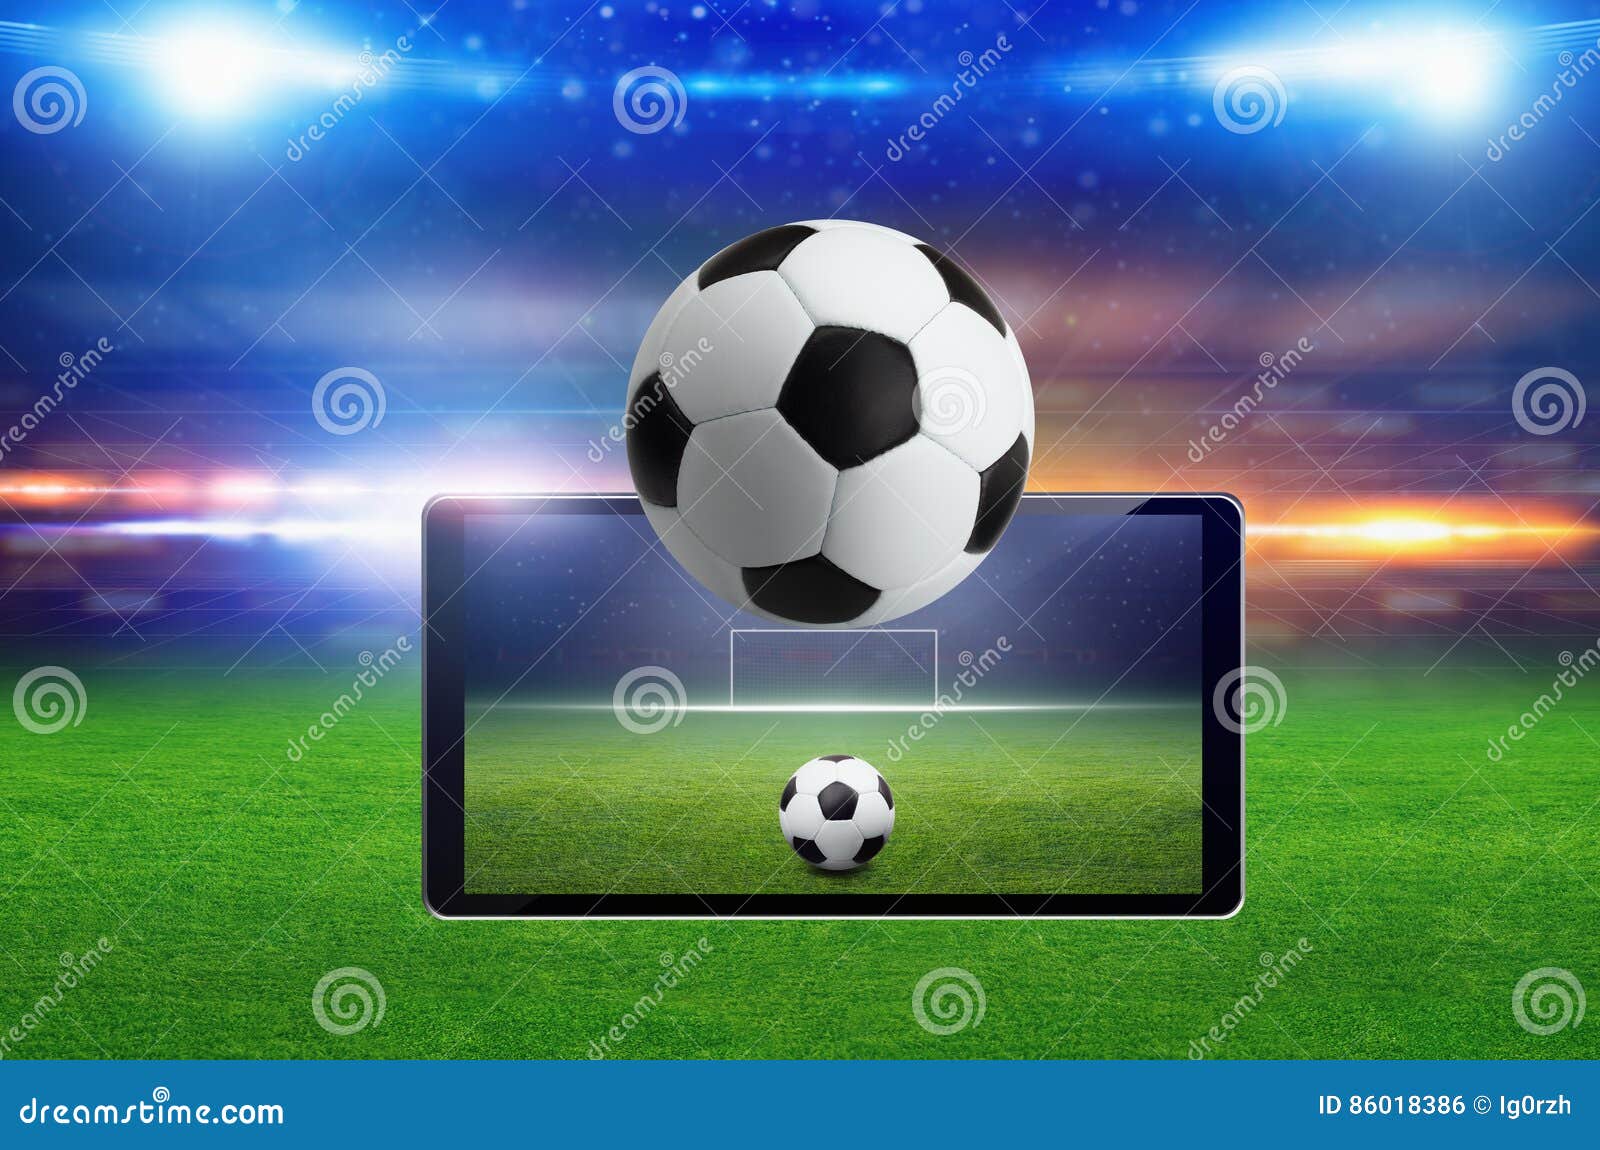 128 Live Soccer Streaming Concept Stock Photos